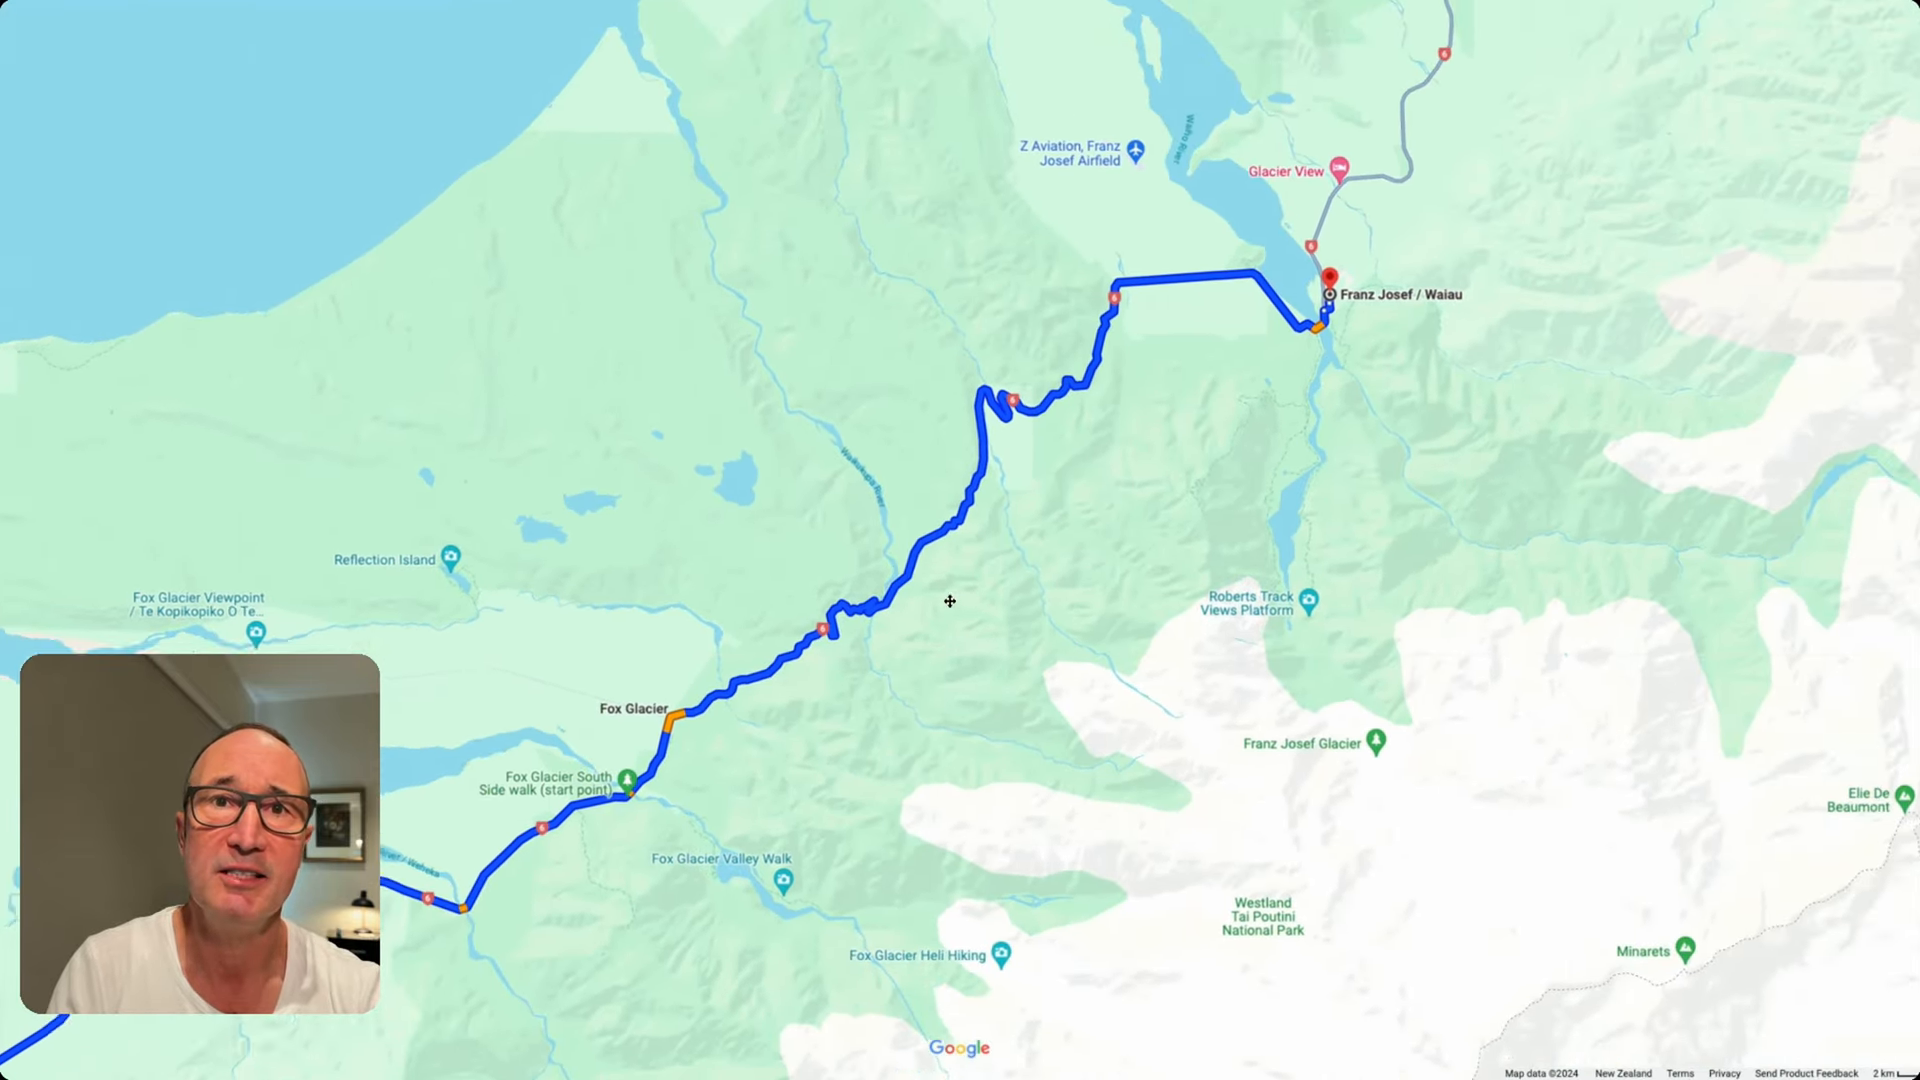 Scenic drive from Wanaka to Franz Josef - Drive between Franz Josef and Fox Glacier Village